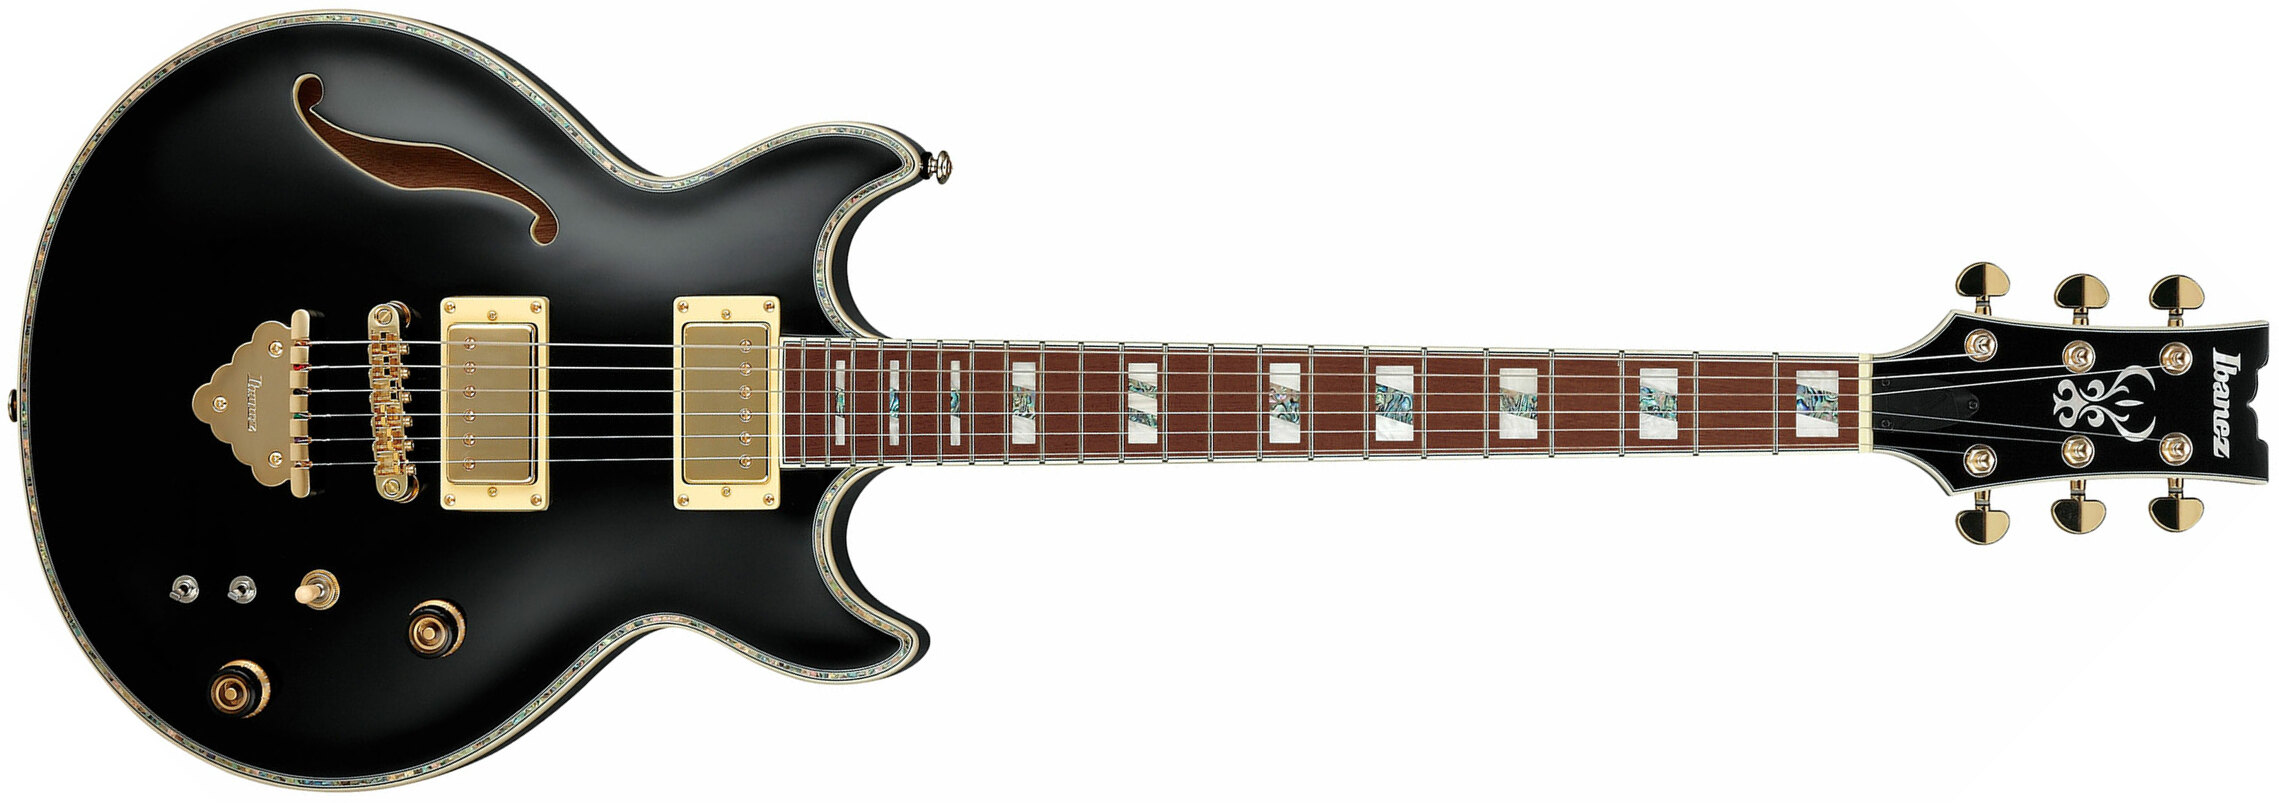 Ibanez Ar520h Bk Standard Hh Ht Jat - Black - Hollowbody E-Gitarre - Main picture